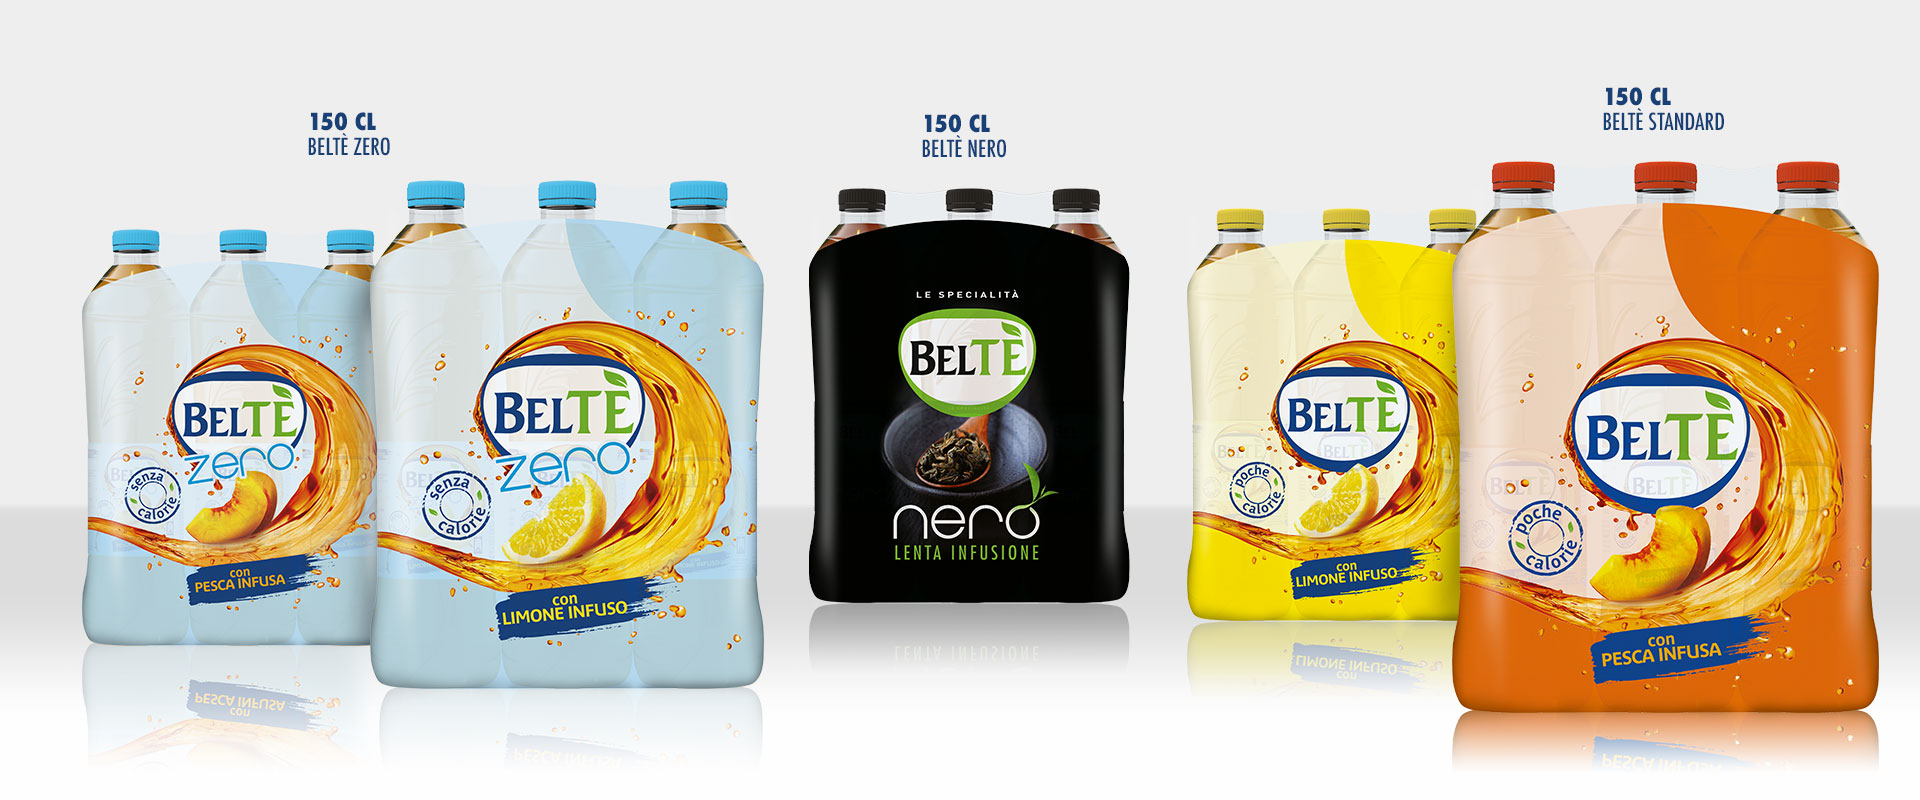 Beltè line 150 cl sizes packaging